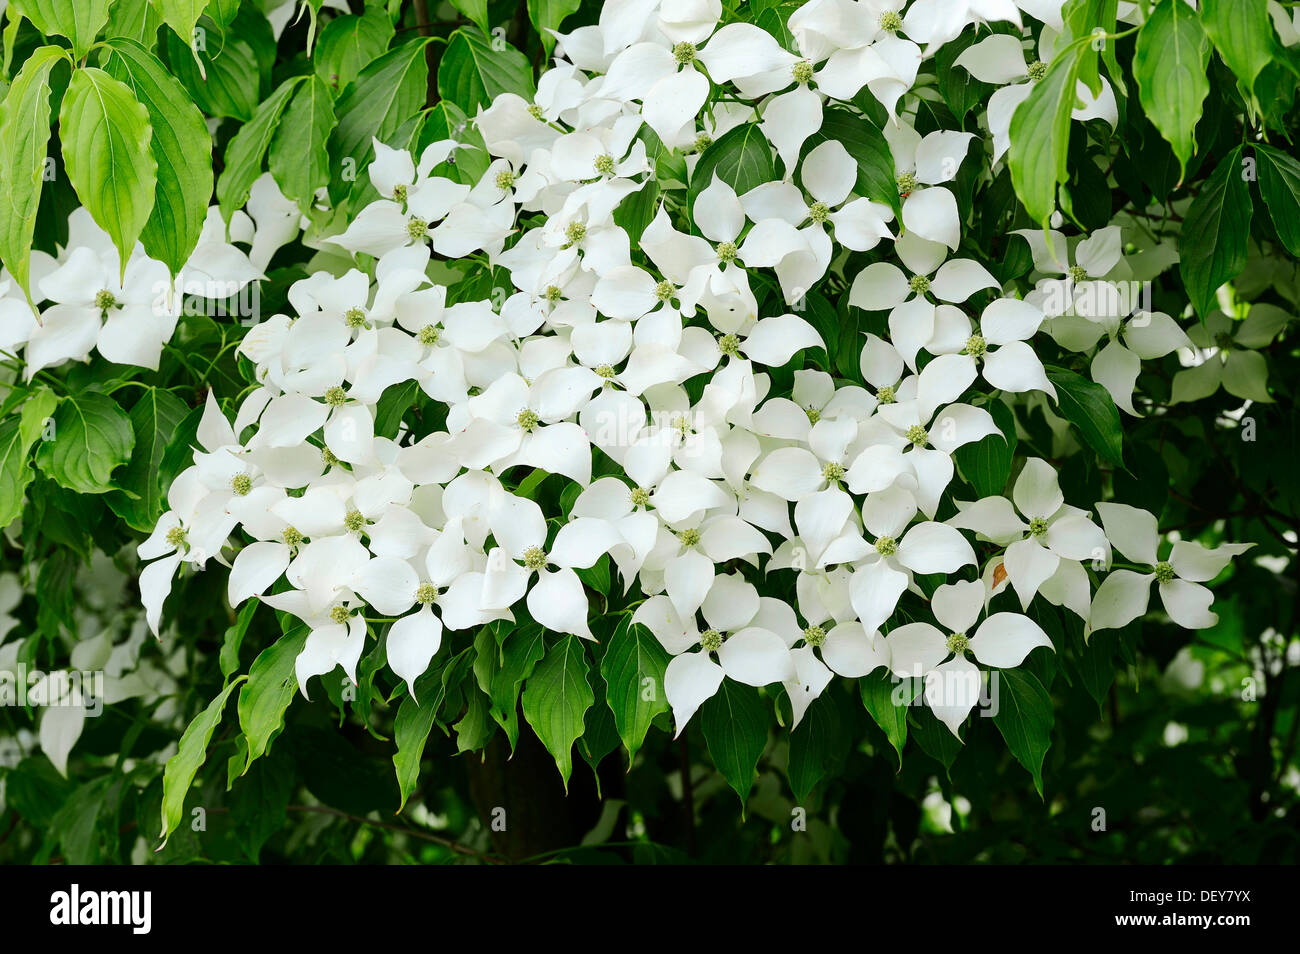 Kousa corniolo, sanguinello Cinese, Coreano Sanguinello o giapponese Sanguinello (Cornus kousa), fioritura, ricorrenza in Asia Foto Stock